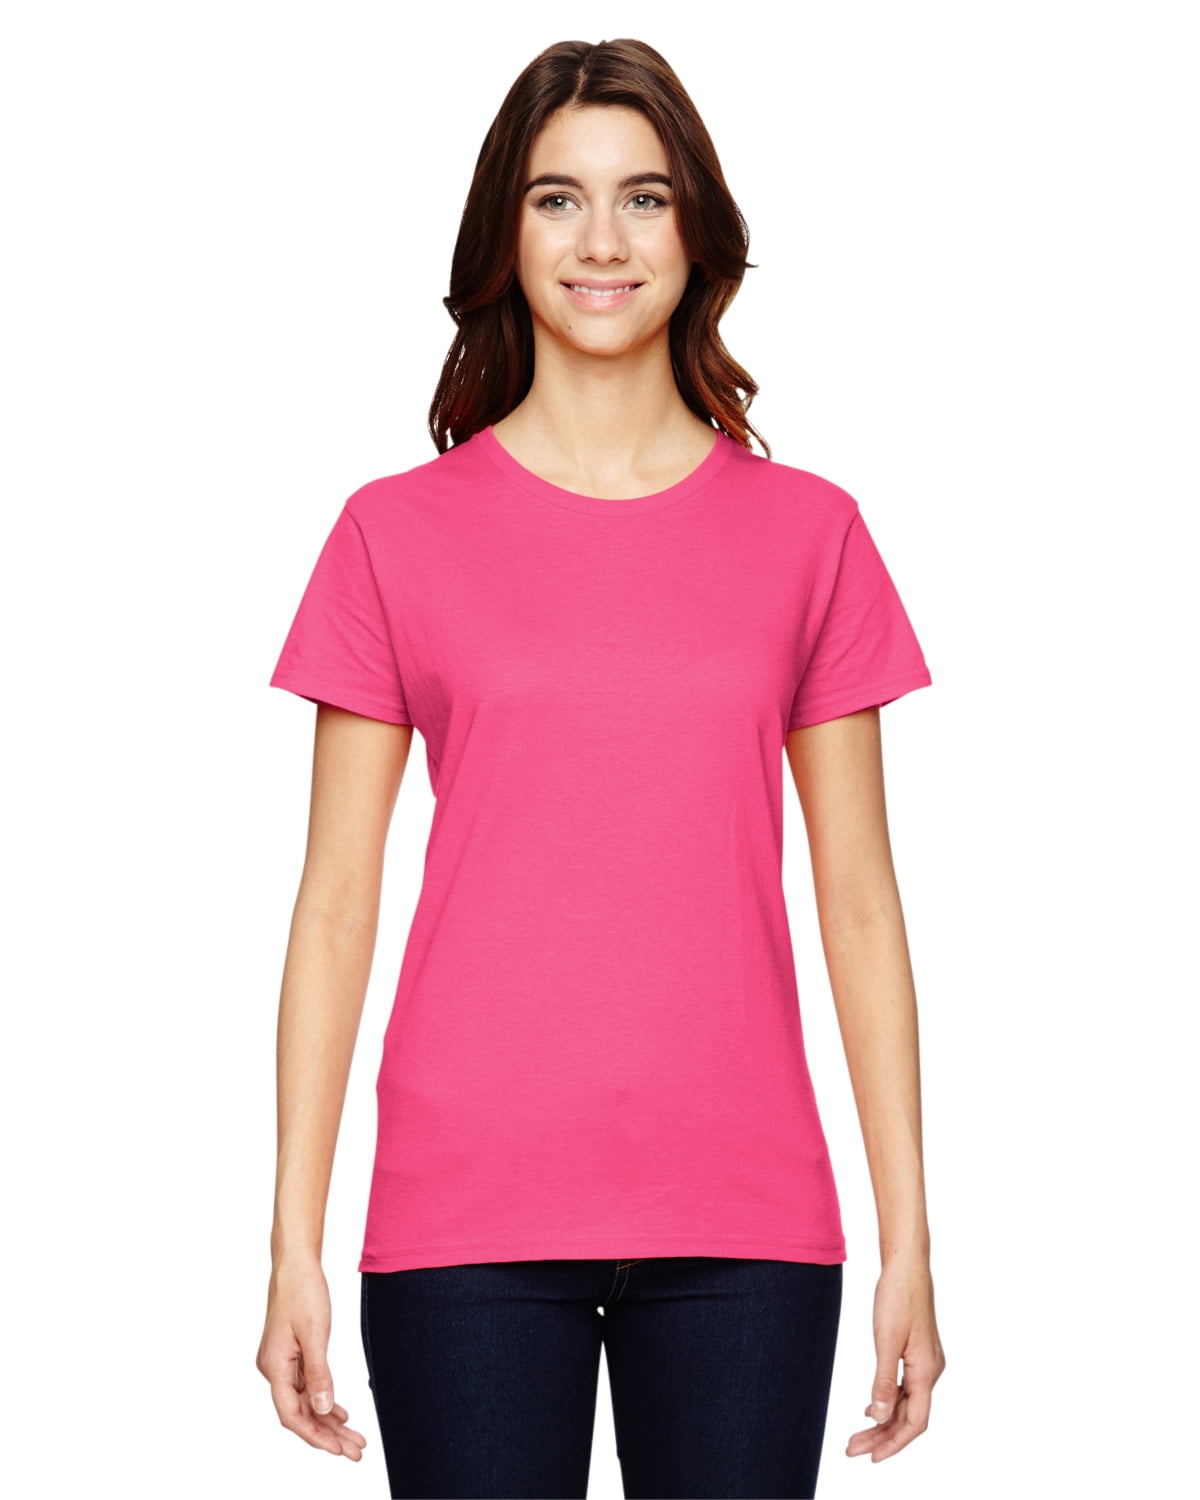 Anvil The Anvil Ladies Lightweight T Shirt Neon Pink S Walmart